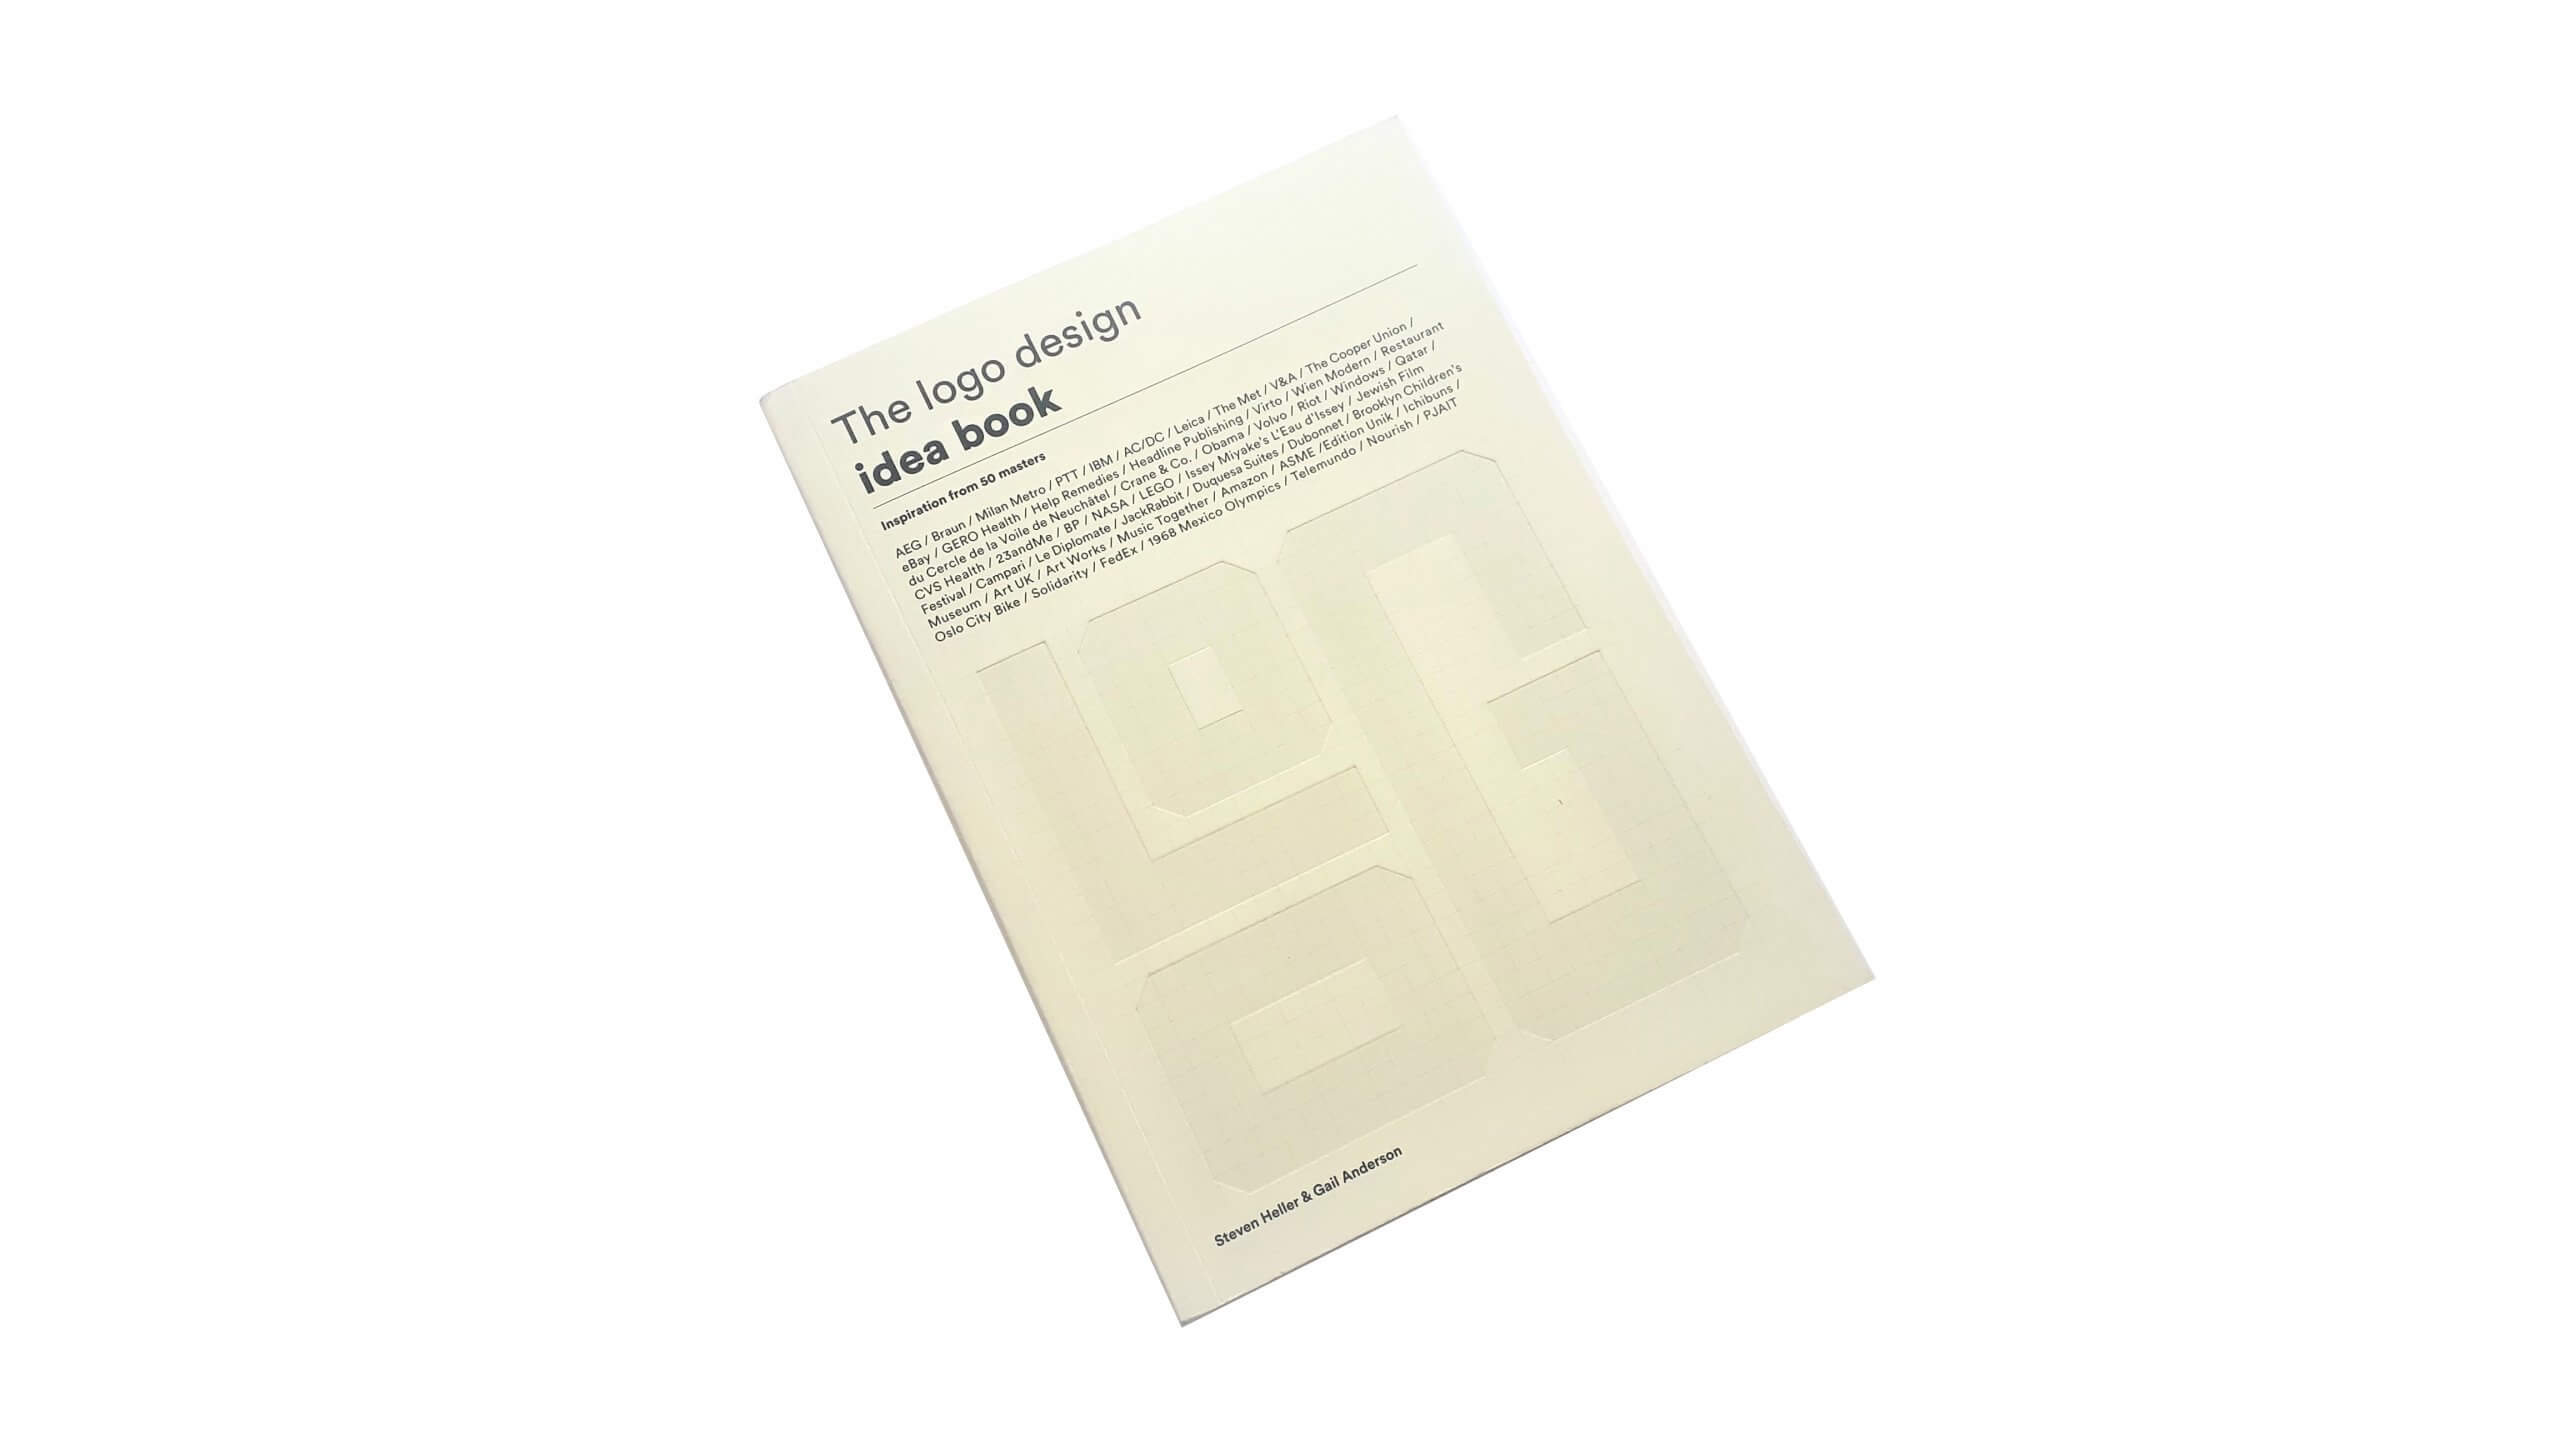 Logo Design ideas Book by Steven Heller & Gail Anderson_2